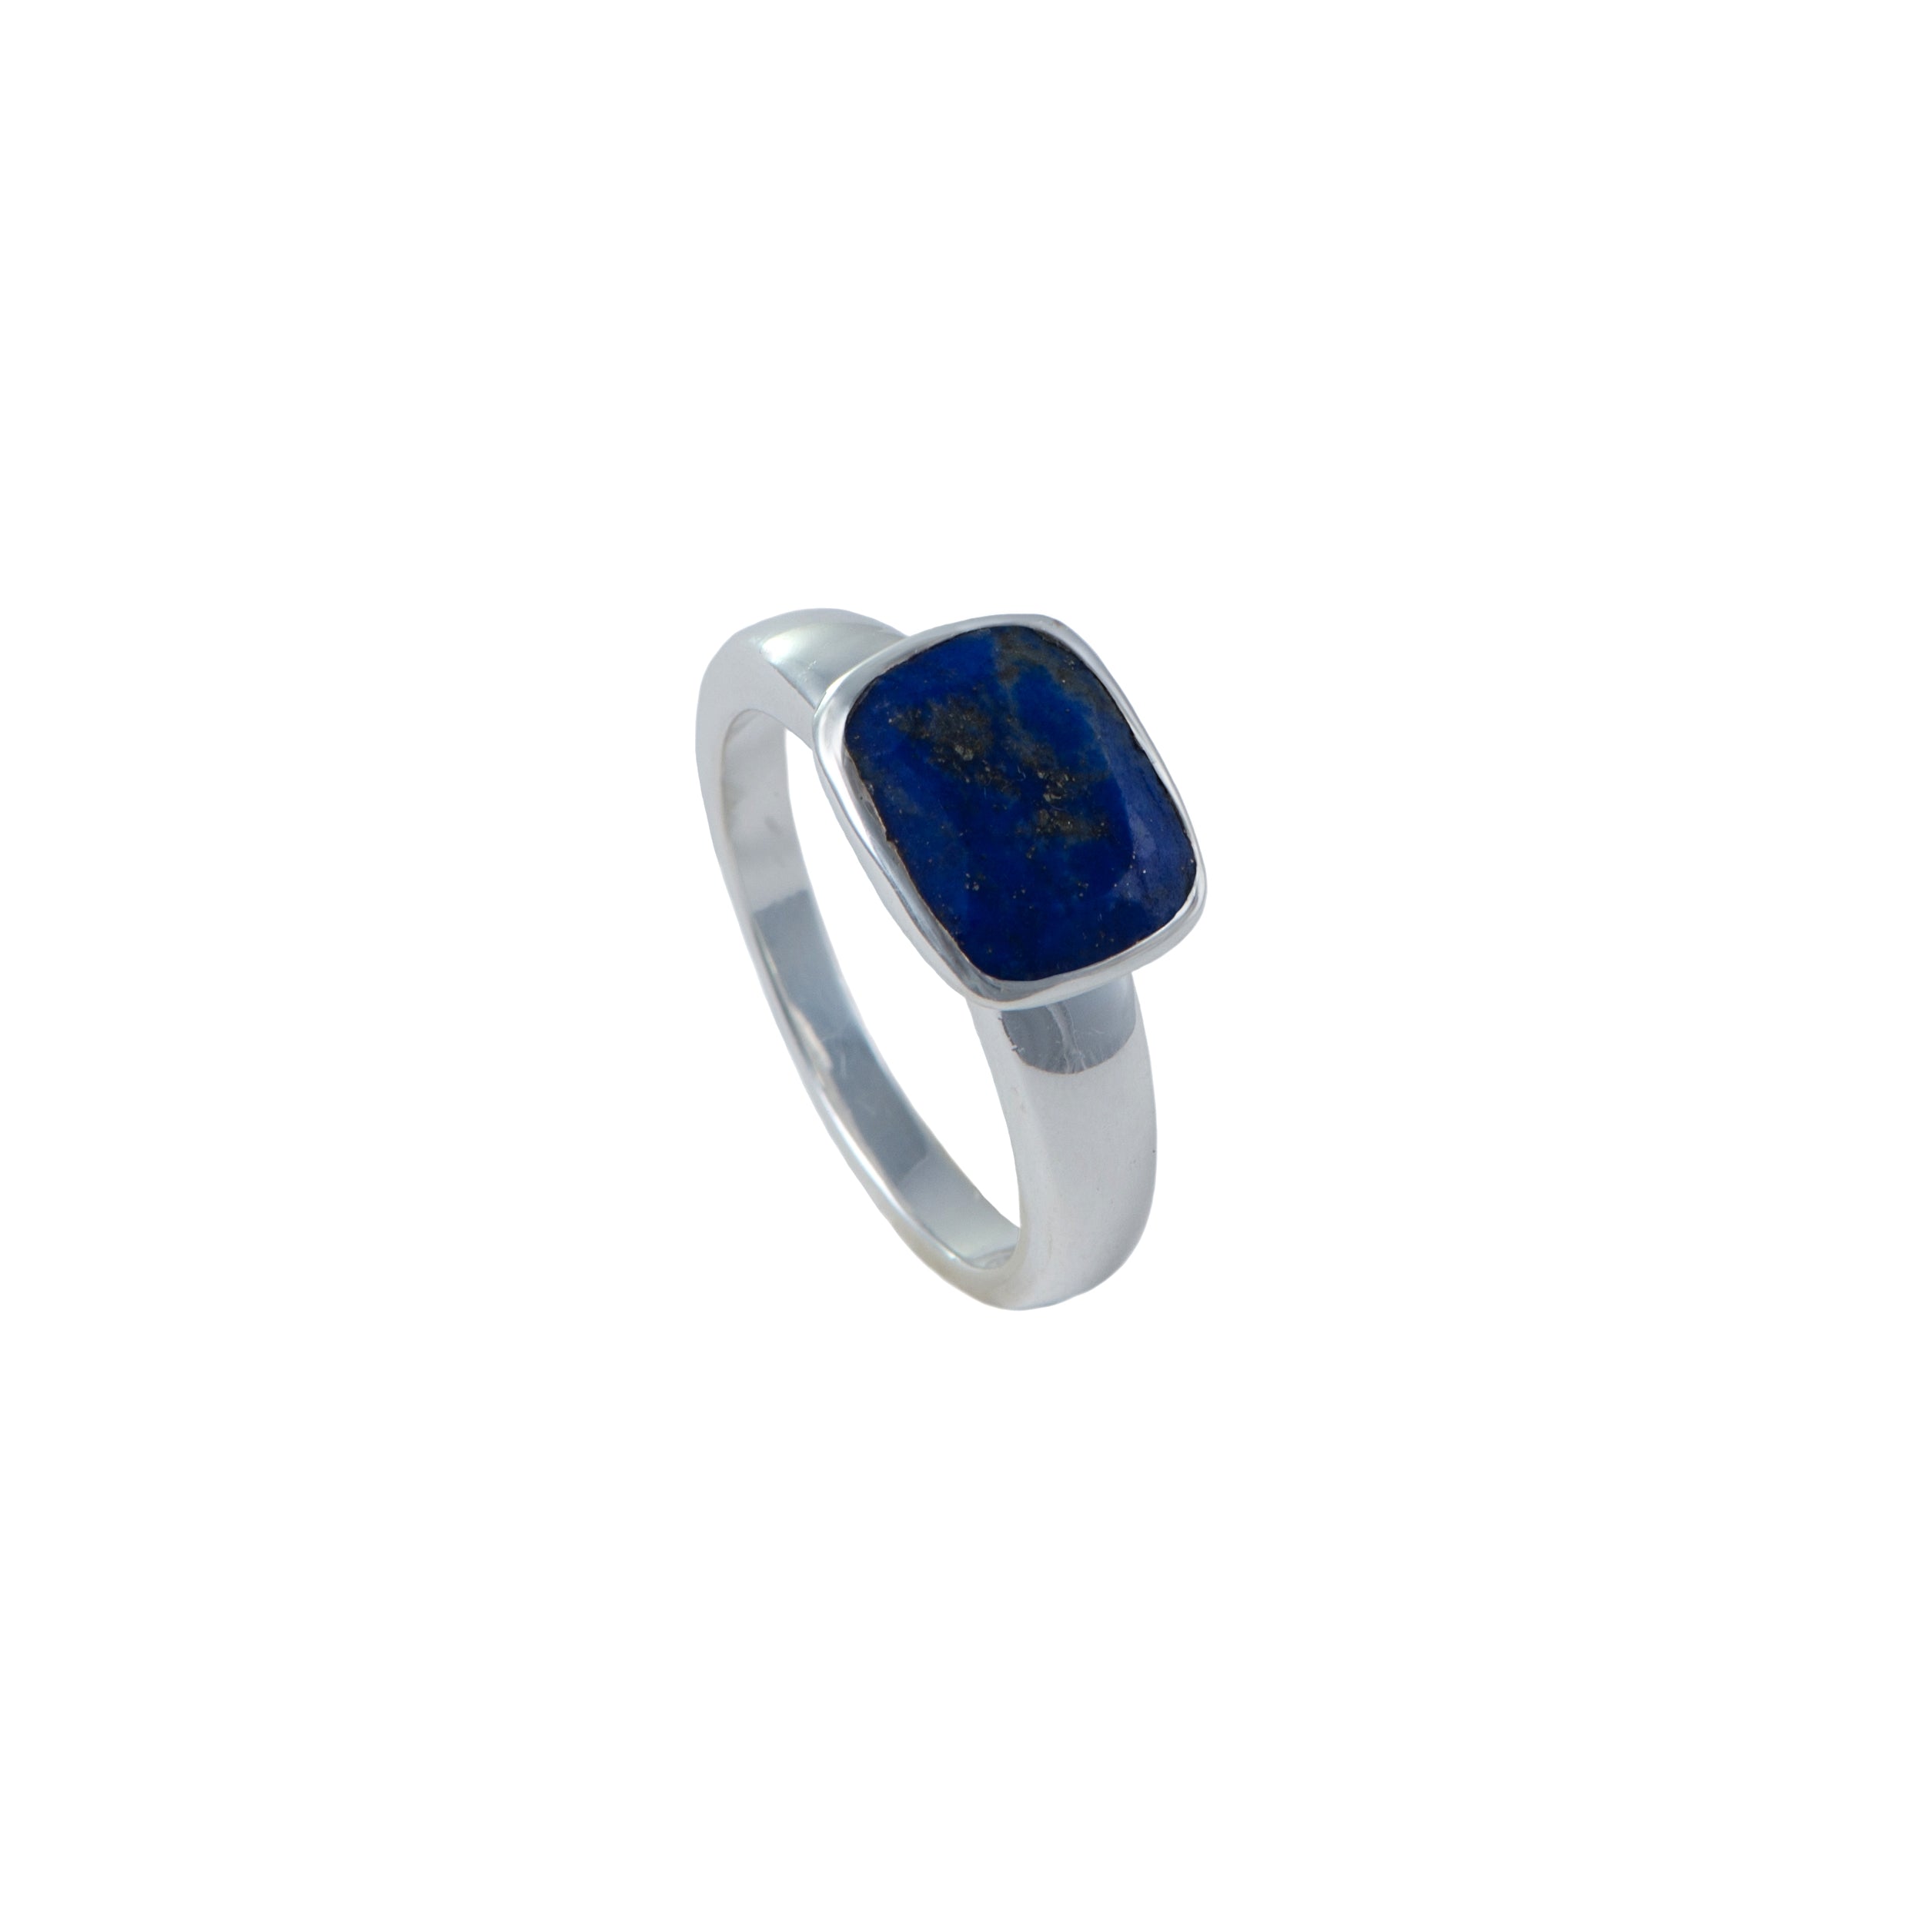 Faceted Rectangular Cut Natural Gemstone Sterling Silver Ring - Lapis Lazuli